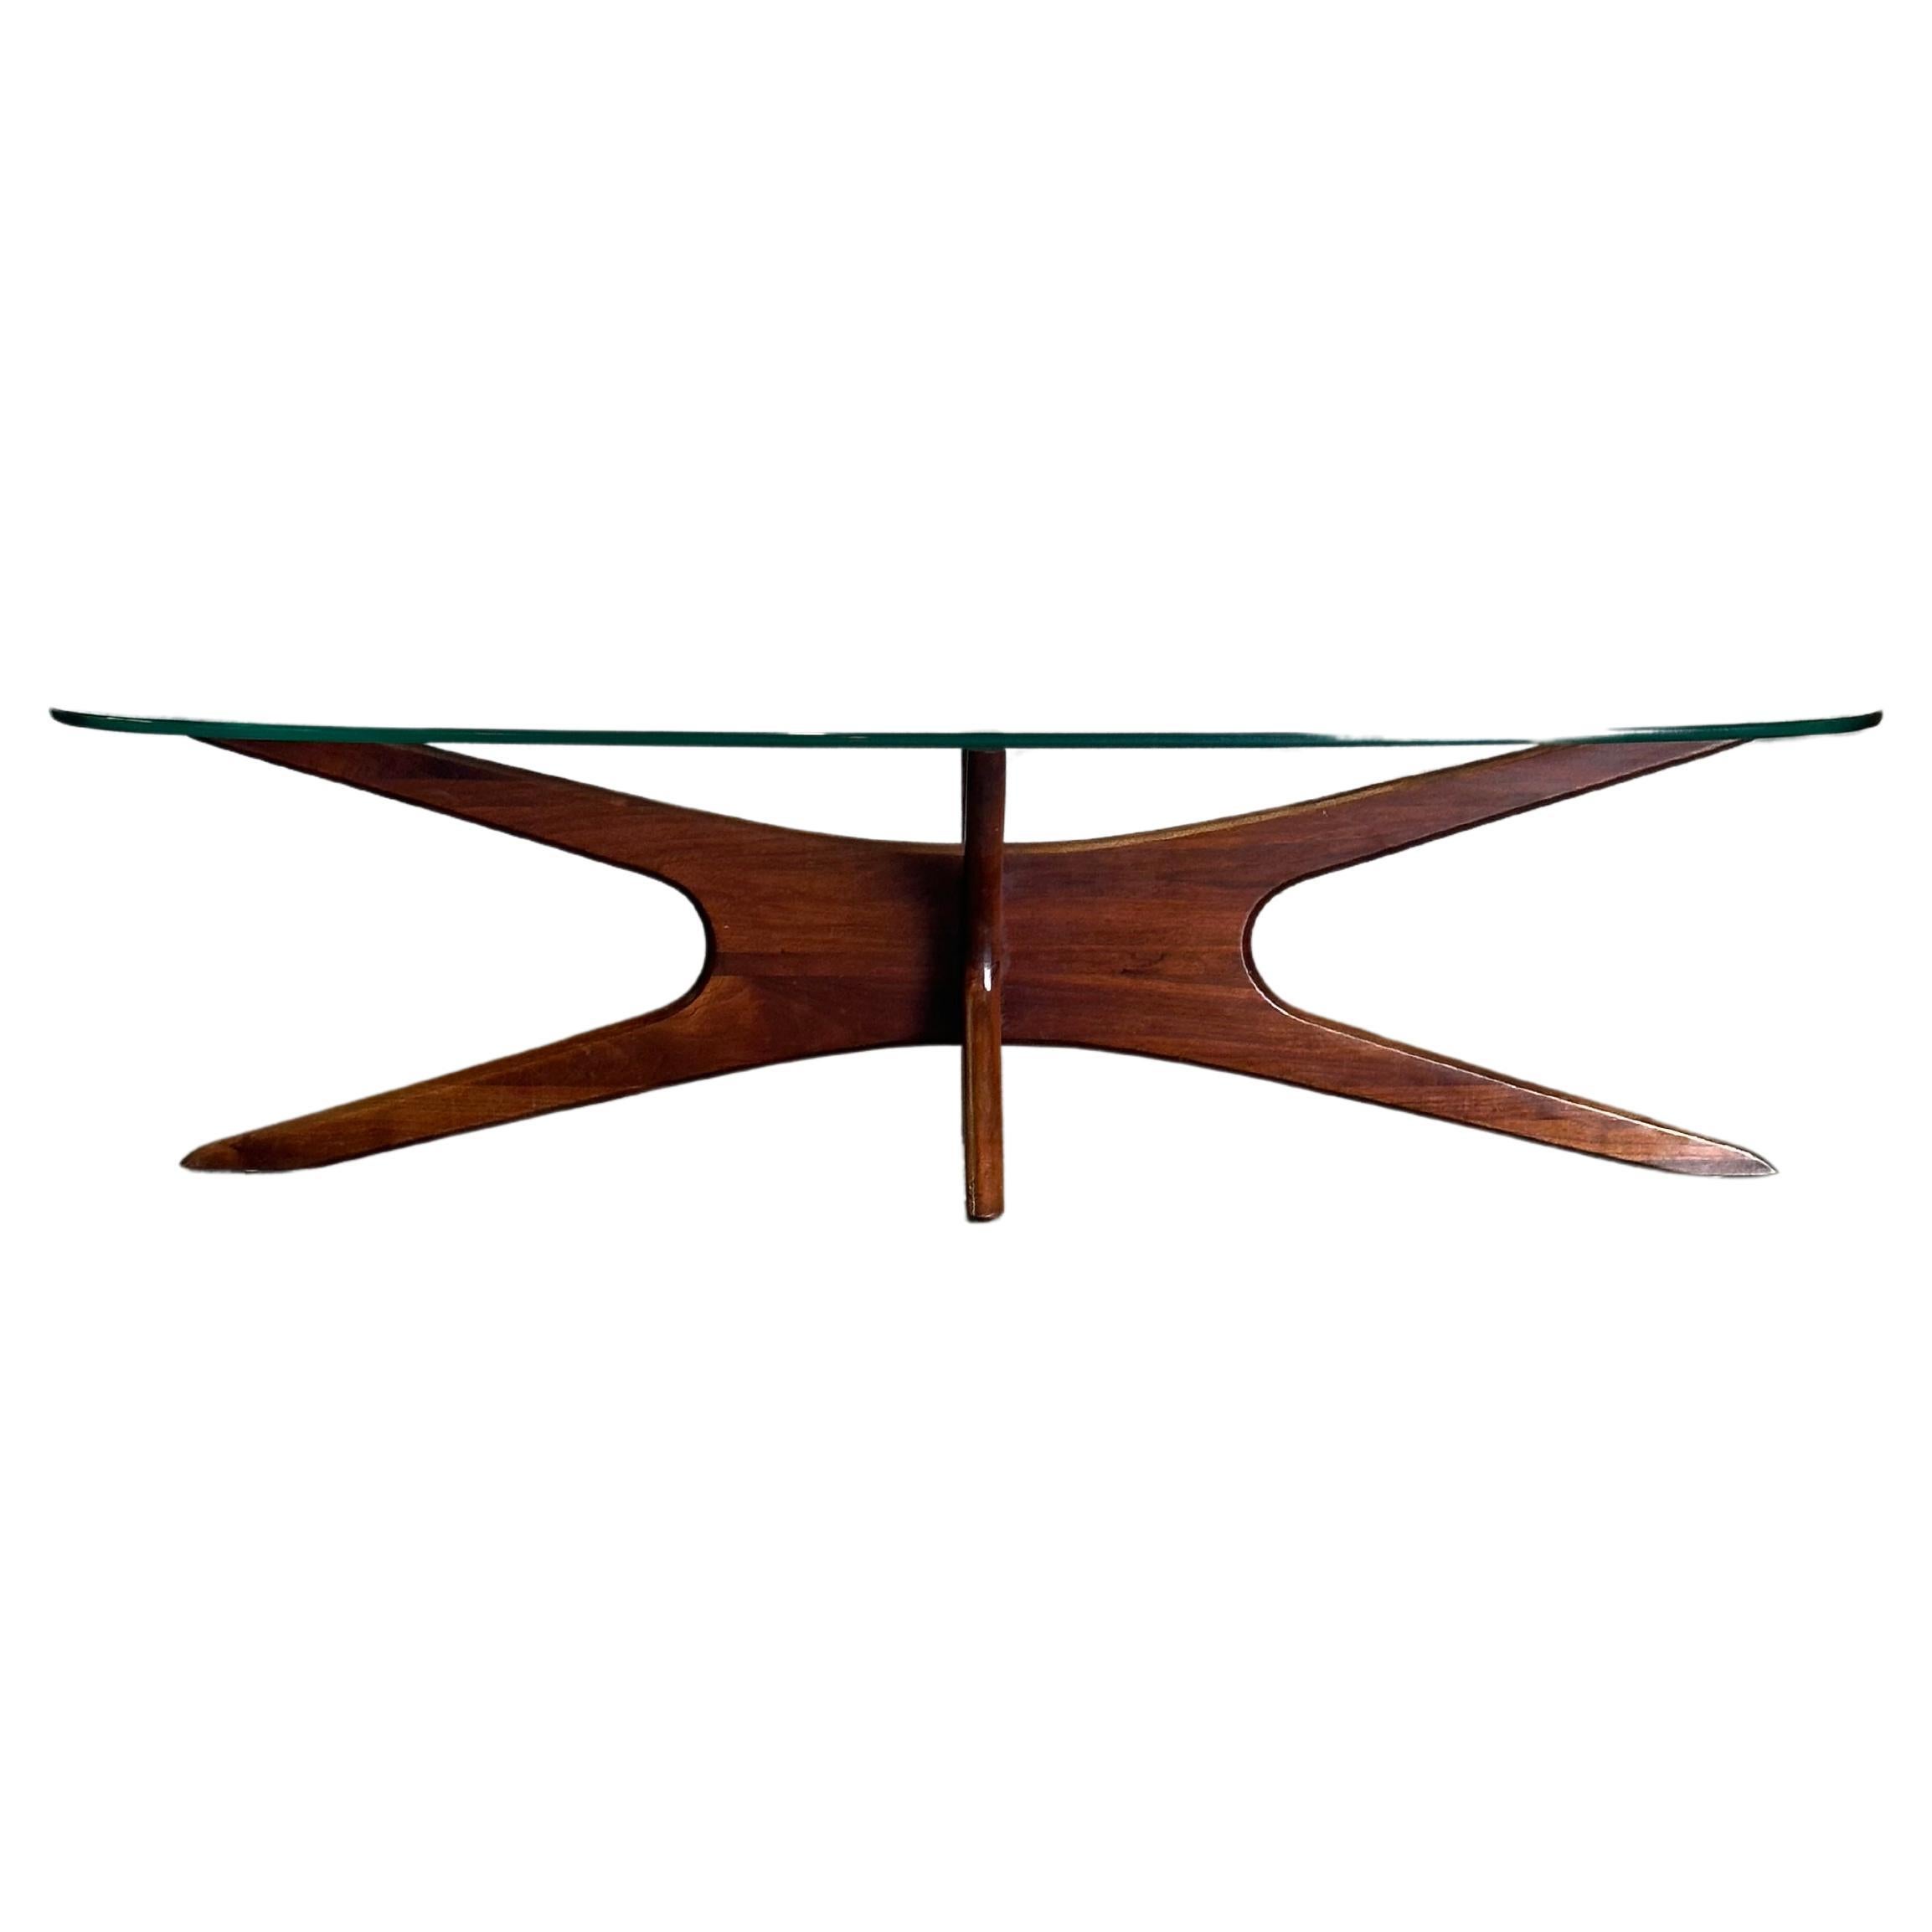 Adrian Pearsall “Jacks” Sculptural Coffee Table, Model 893-Tgo, Walnut and Glass